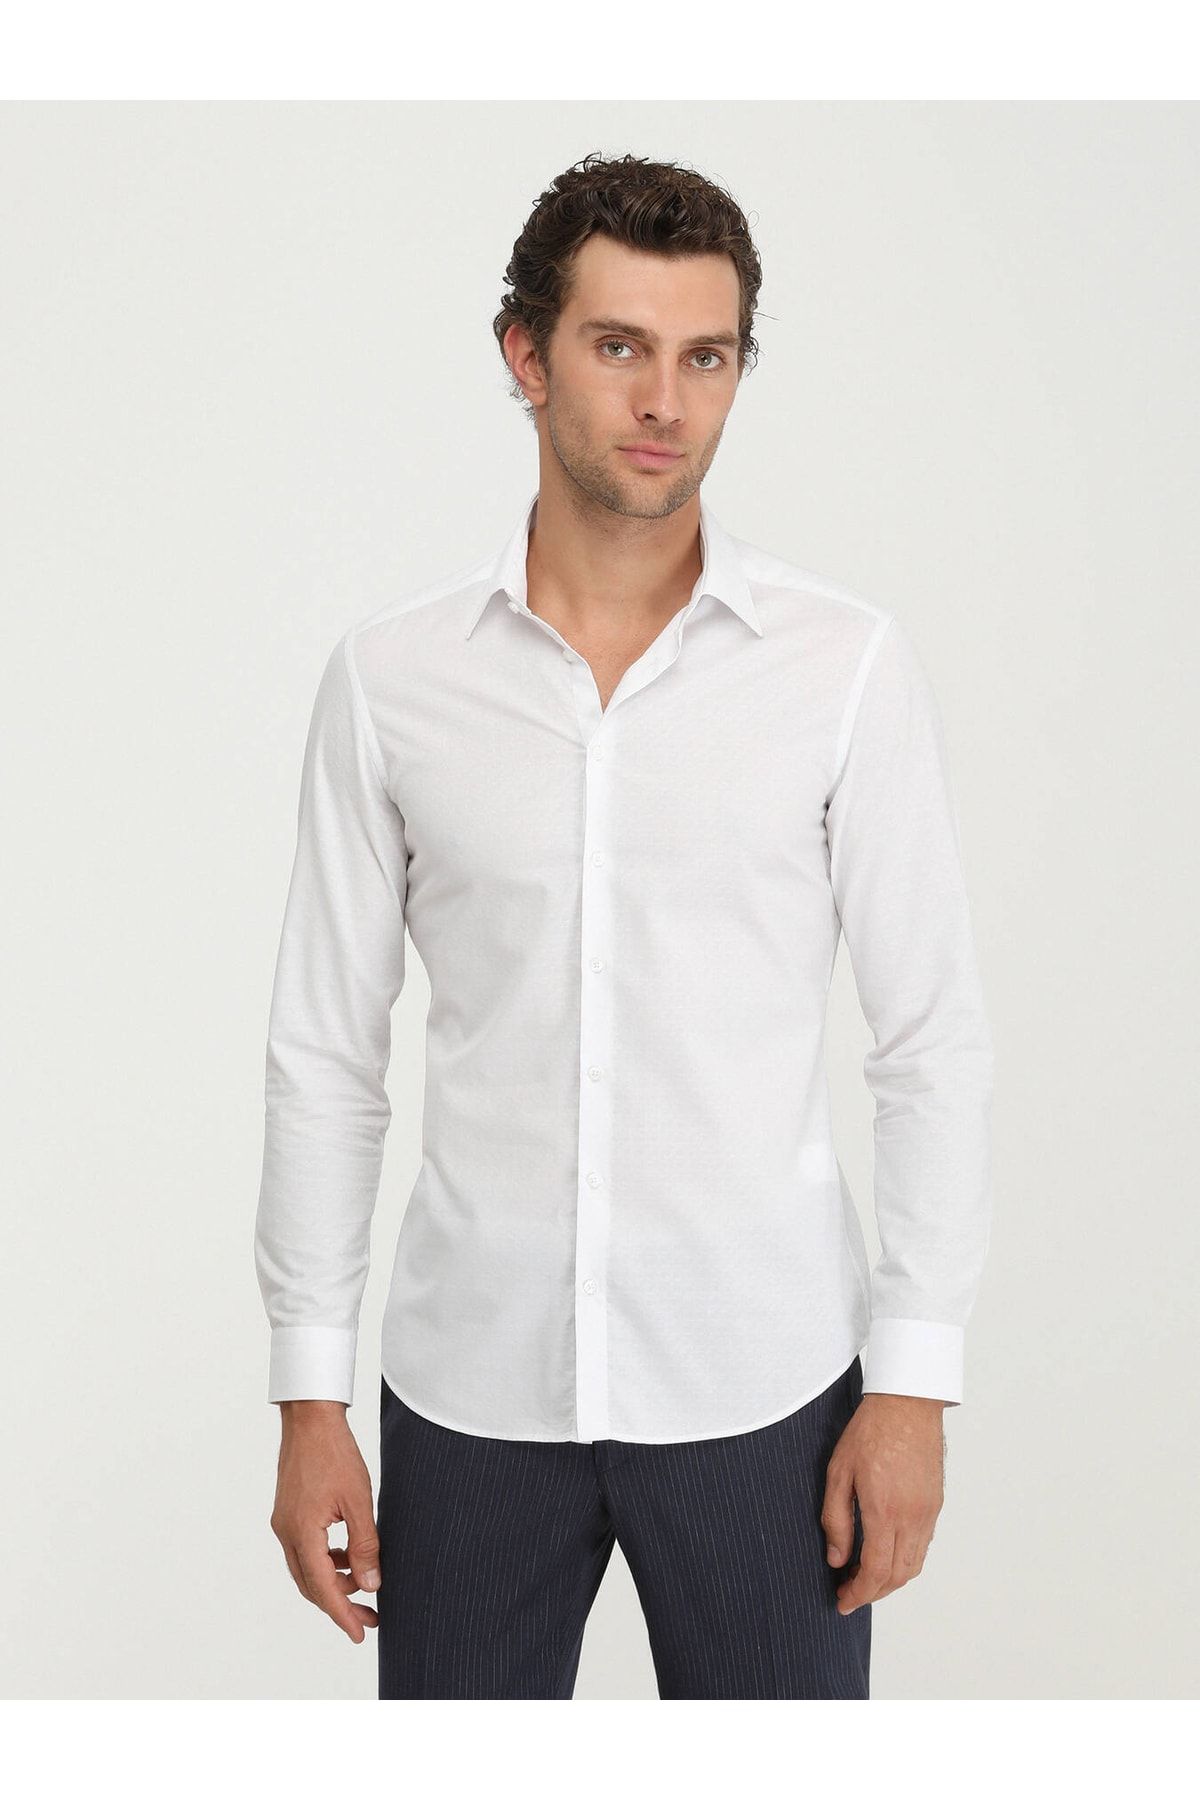 Kip Beyaz Düz Slim Fit Dokuma Klasik %100 Pamuk Gömlek